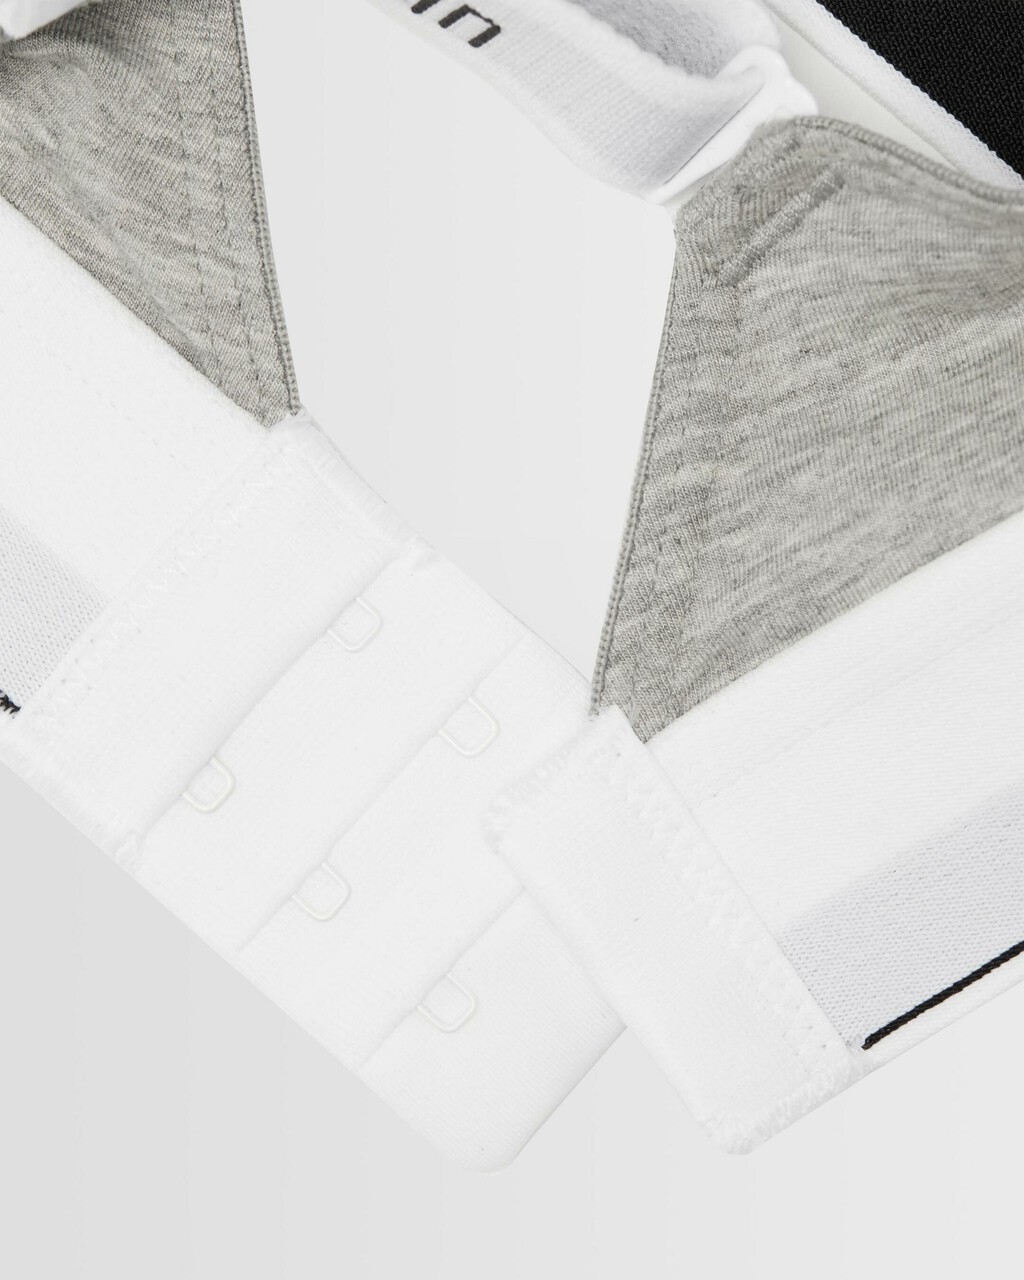 現代棉質薄墊無鋼圈胸罩, B10 Grey Heather, hi-res